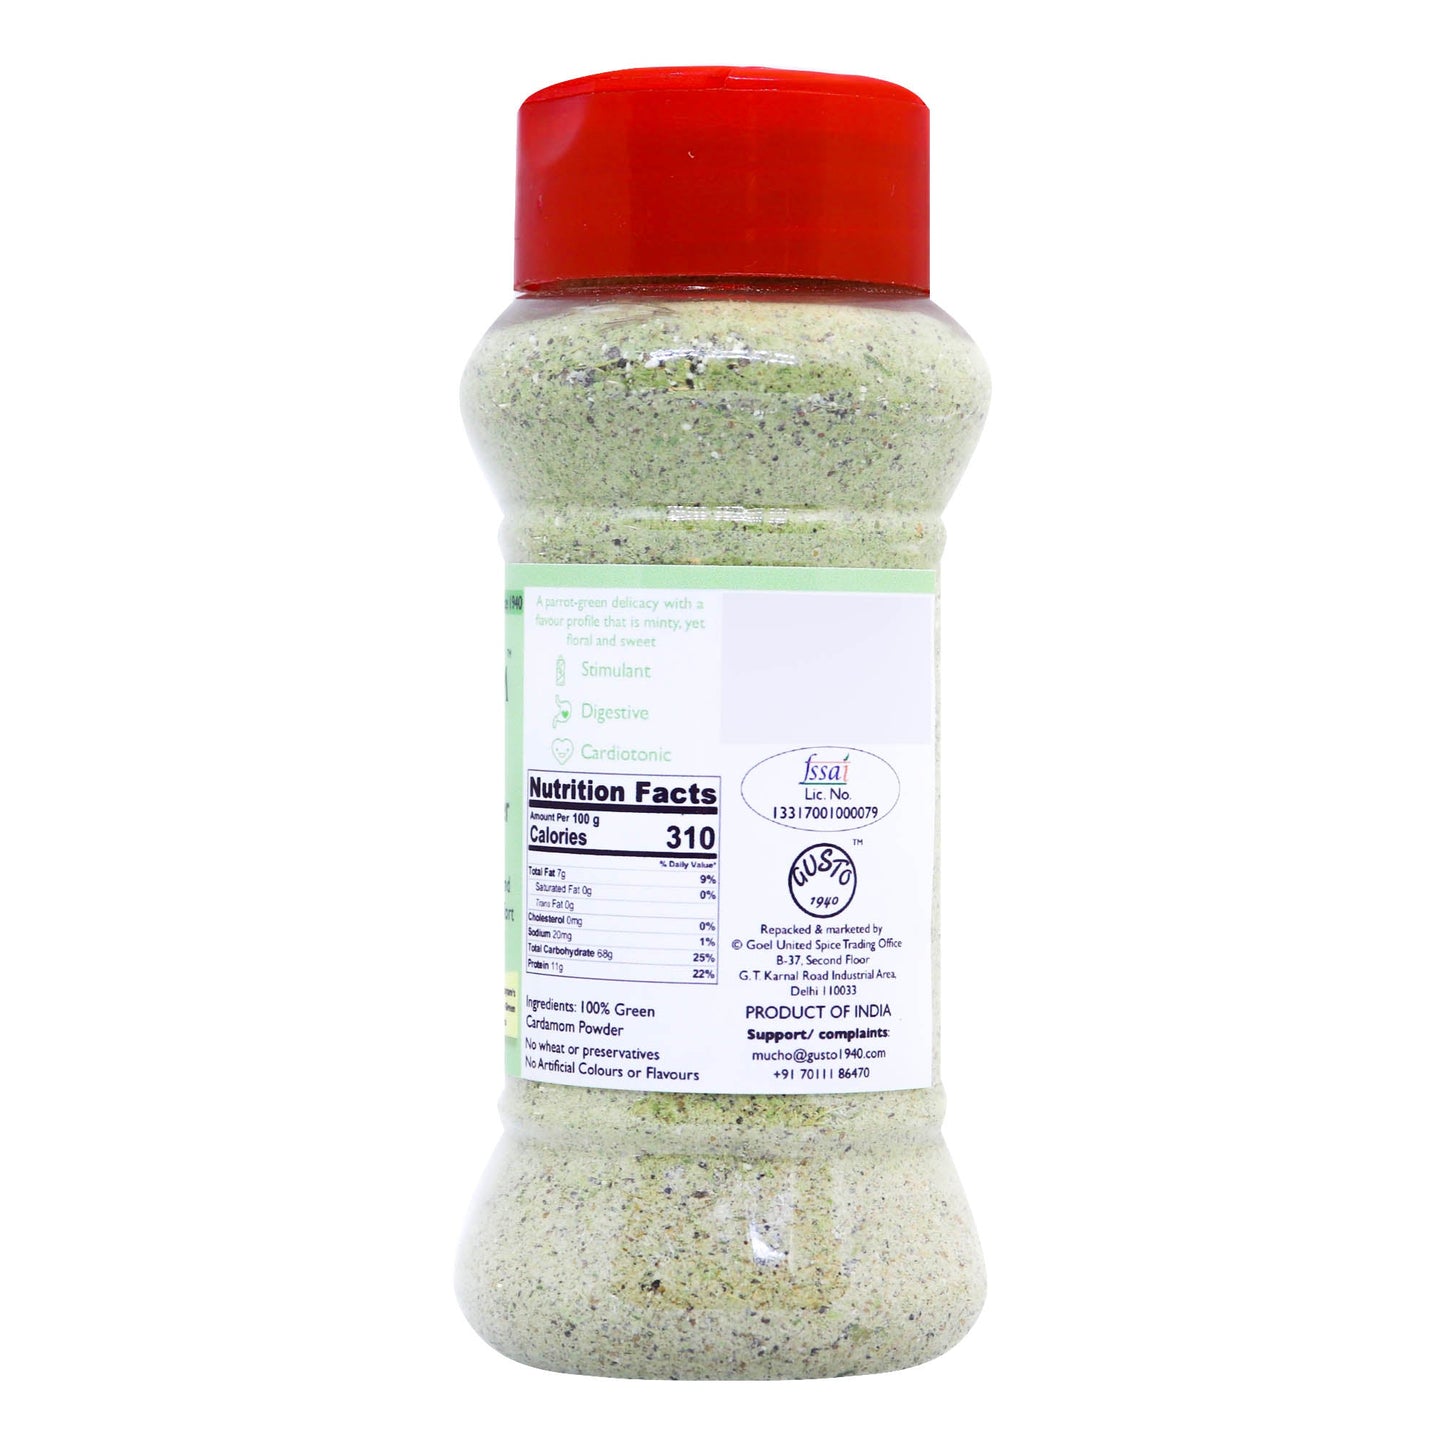 Premium Elaichi Powder 80g - Tassyam Organics